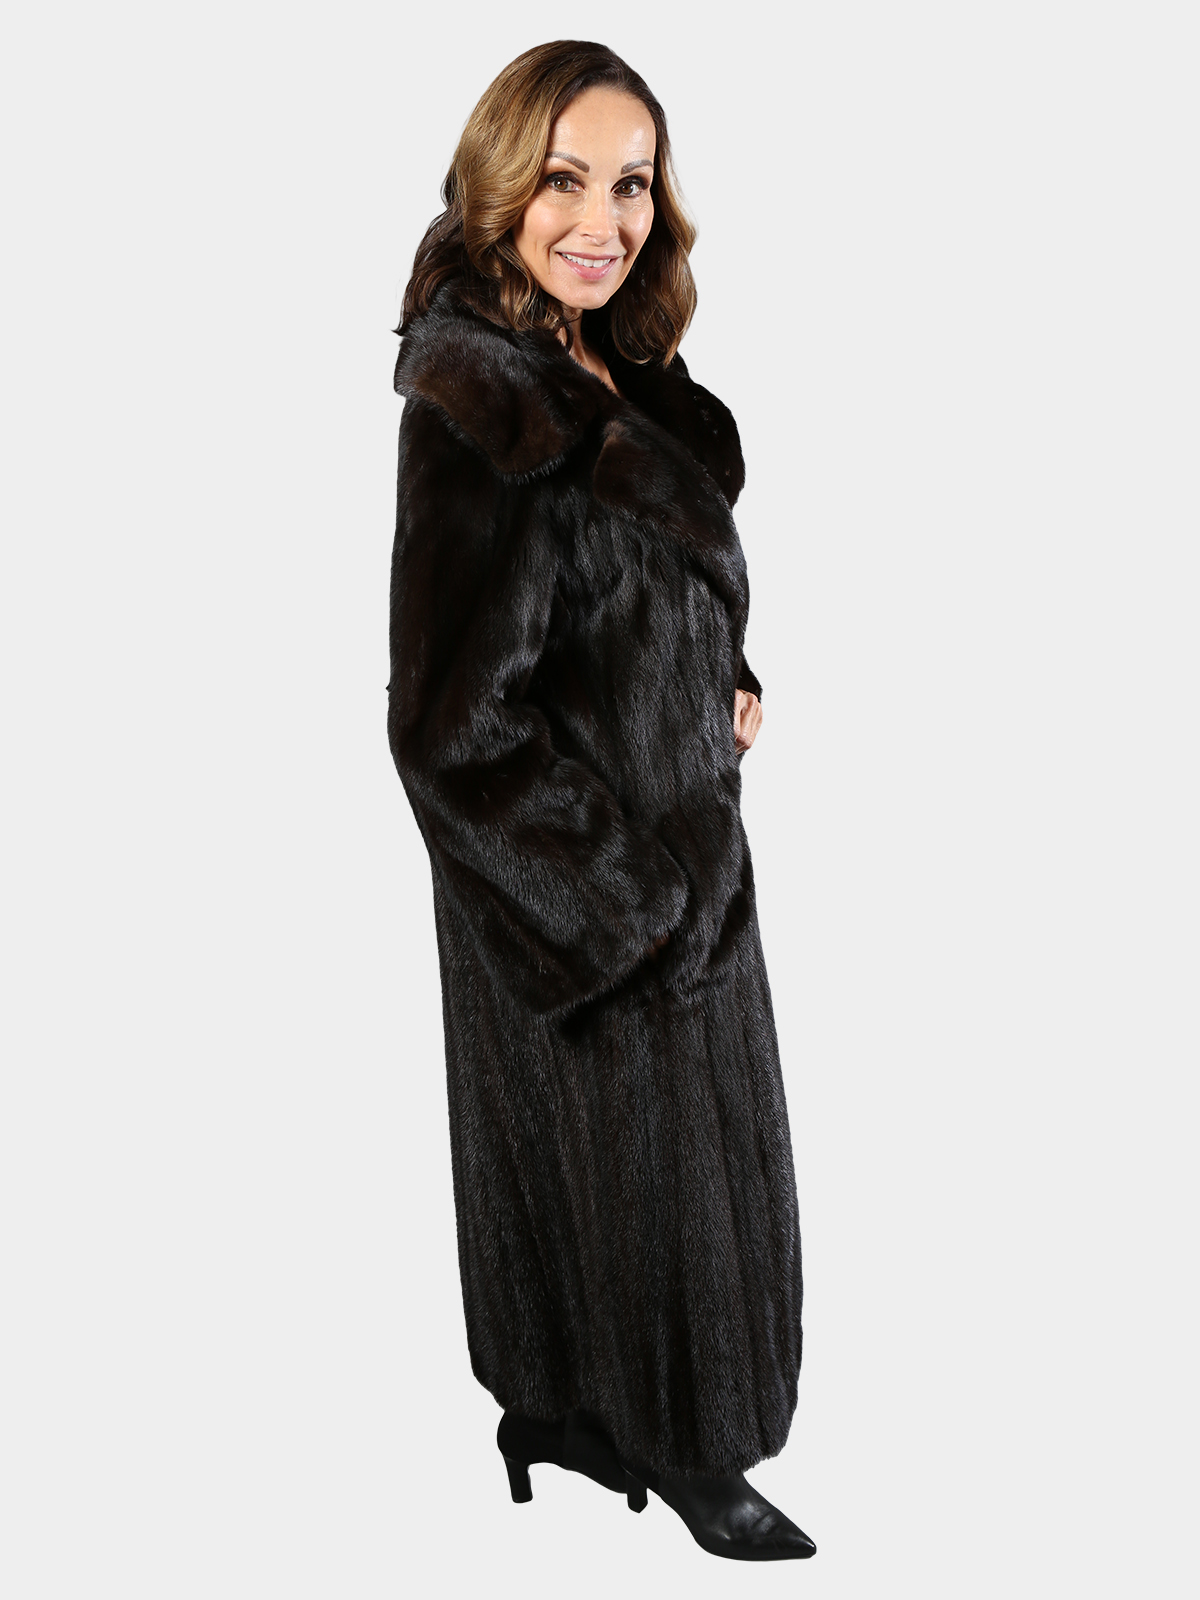 Ranch Mink Female Fur Coat (Women's Large) - Estate Furs